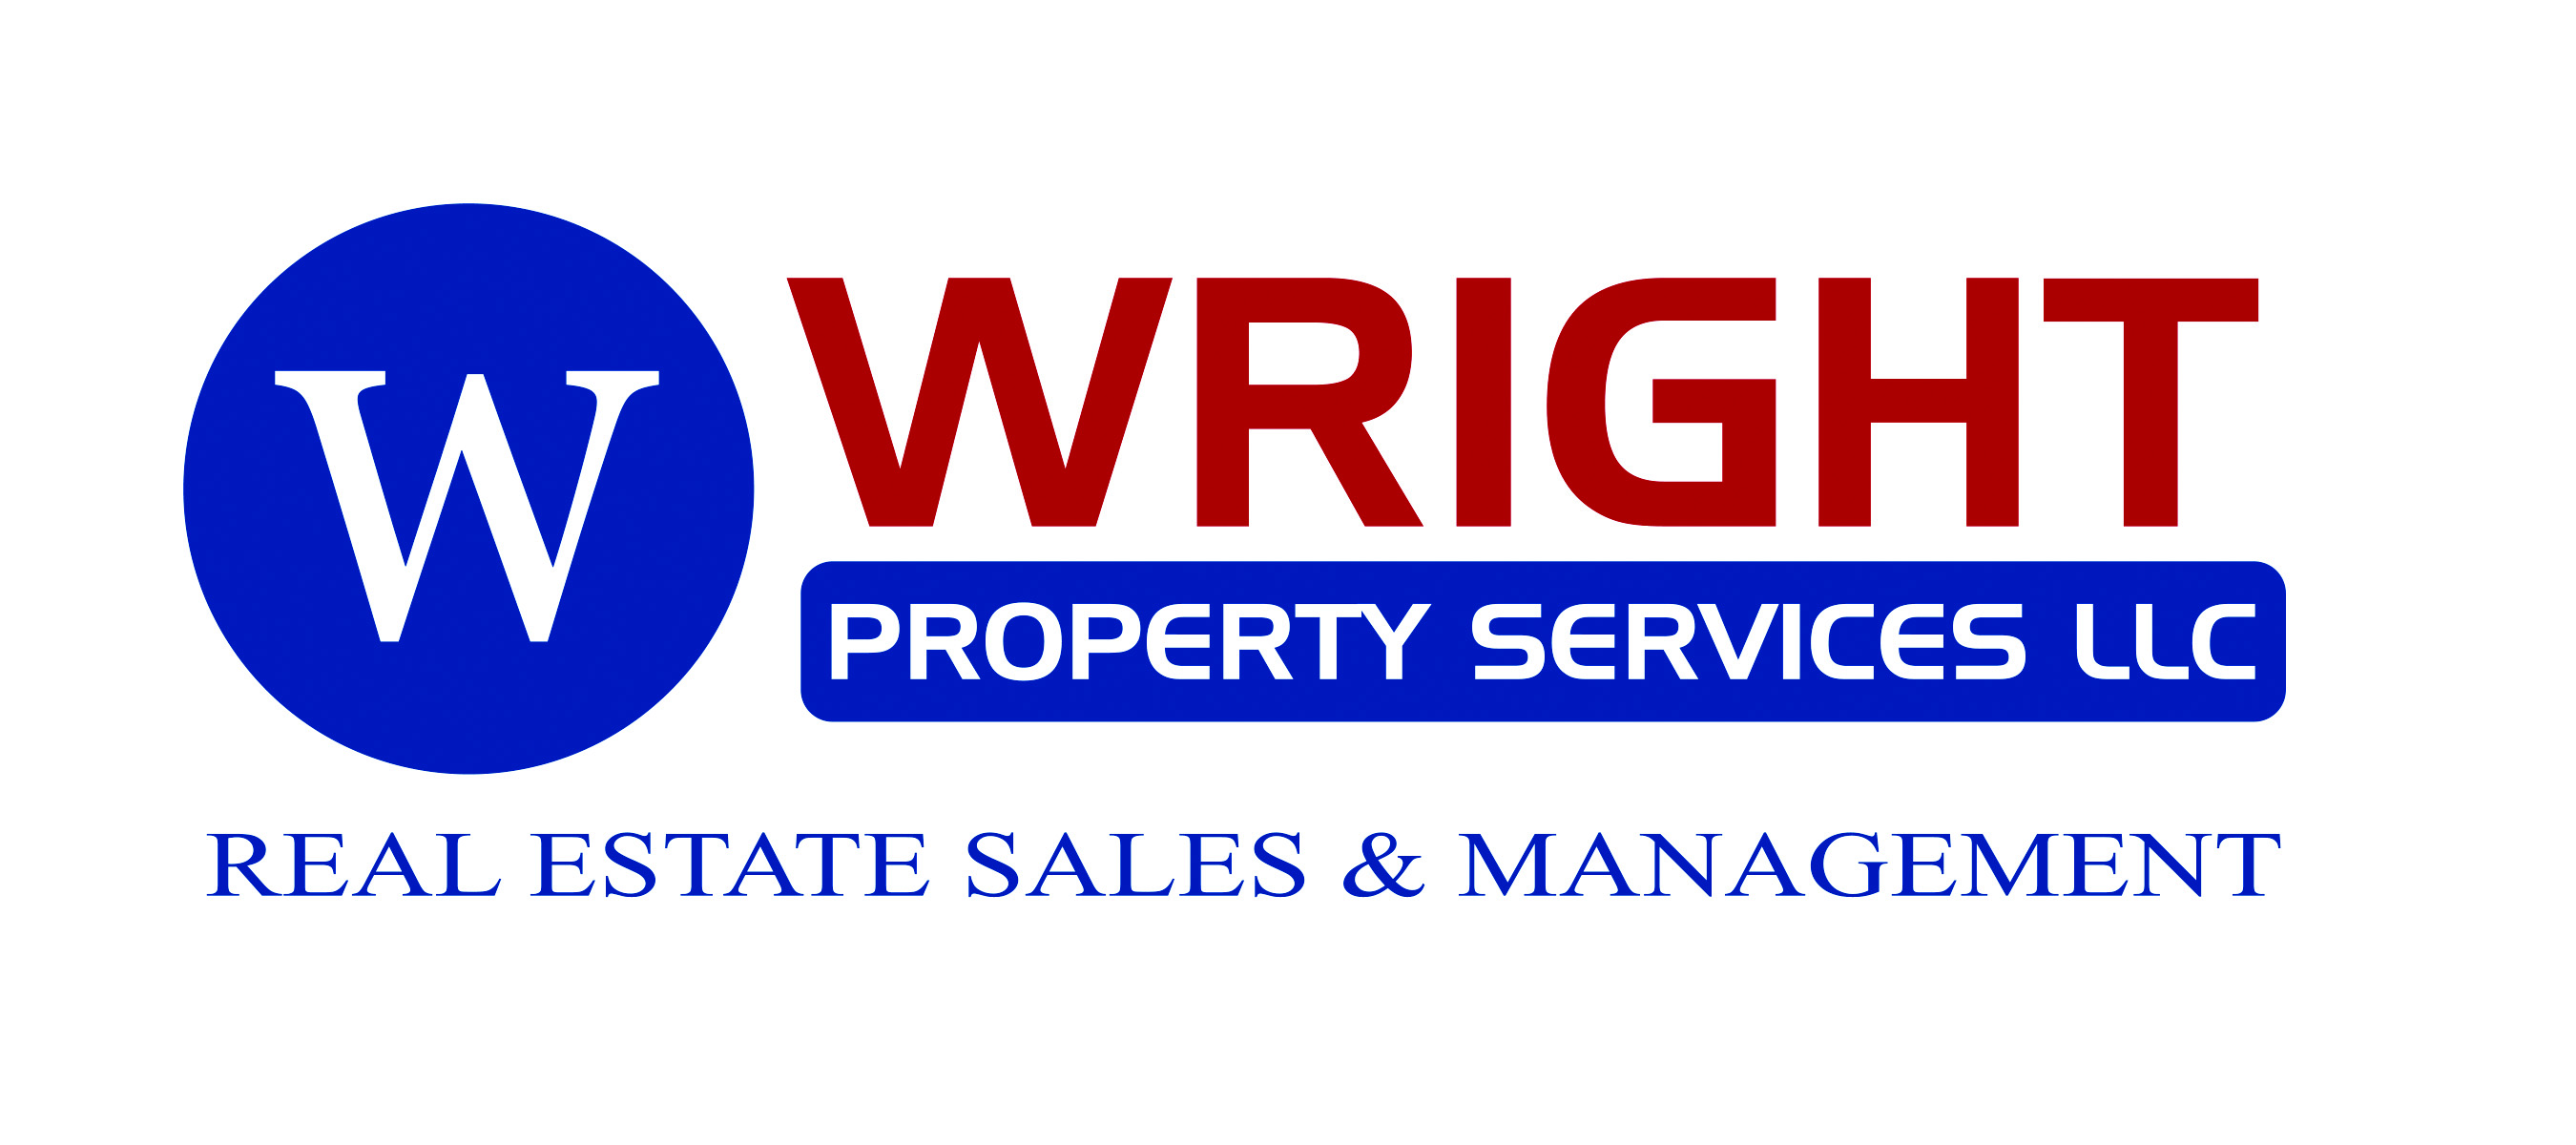 Wright Property Services LLC